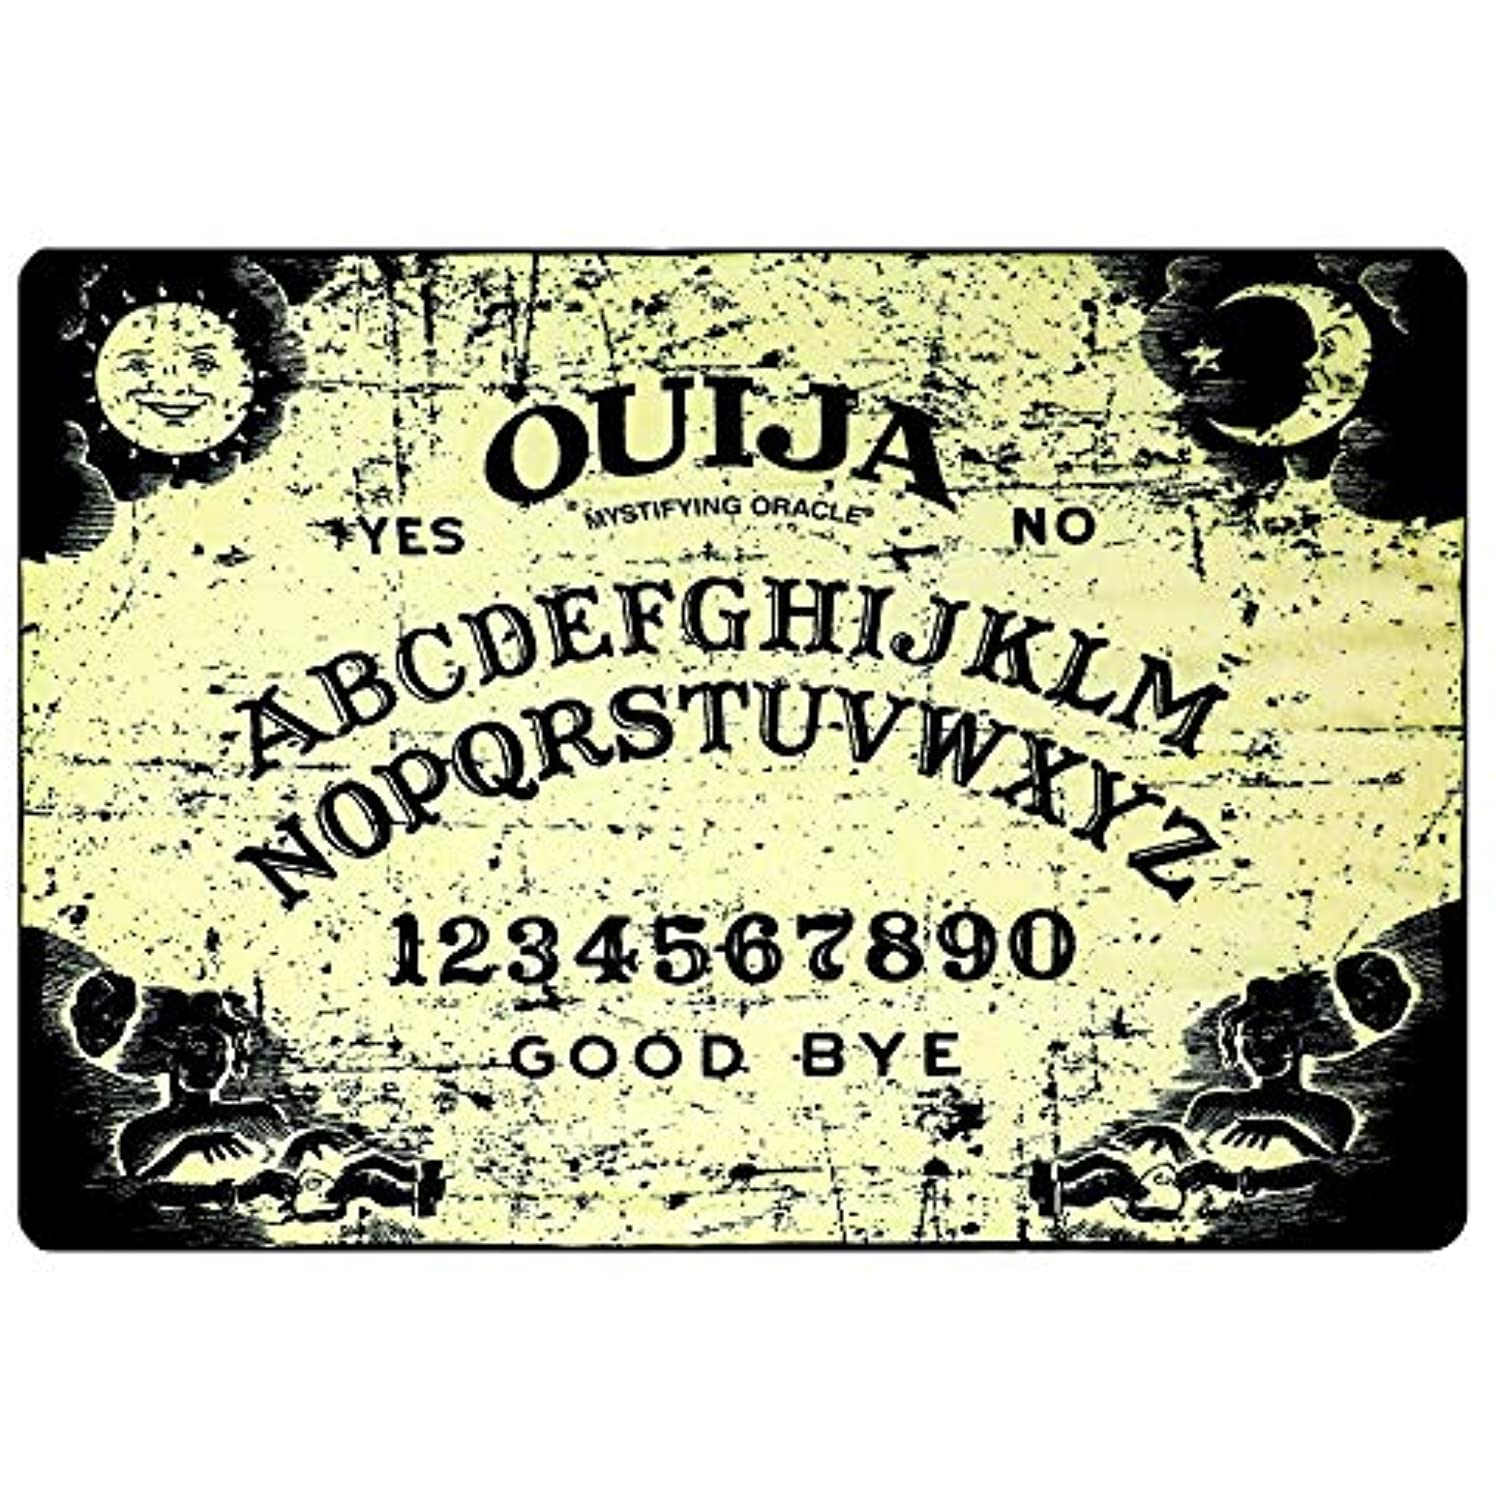 Official Ouija Board Fleece Throw Blanket 48x60"